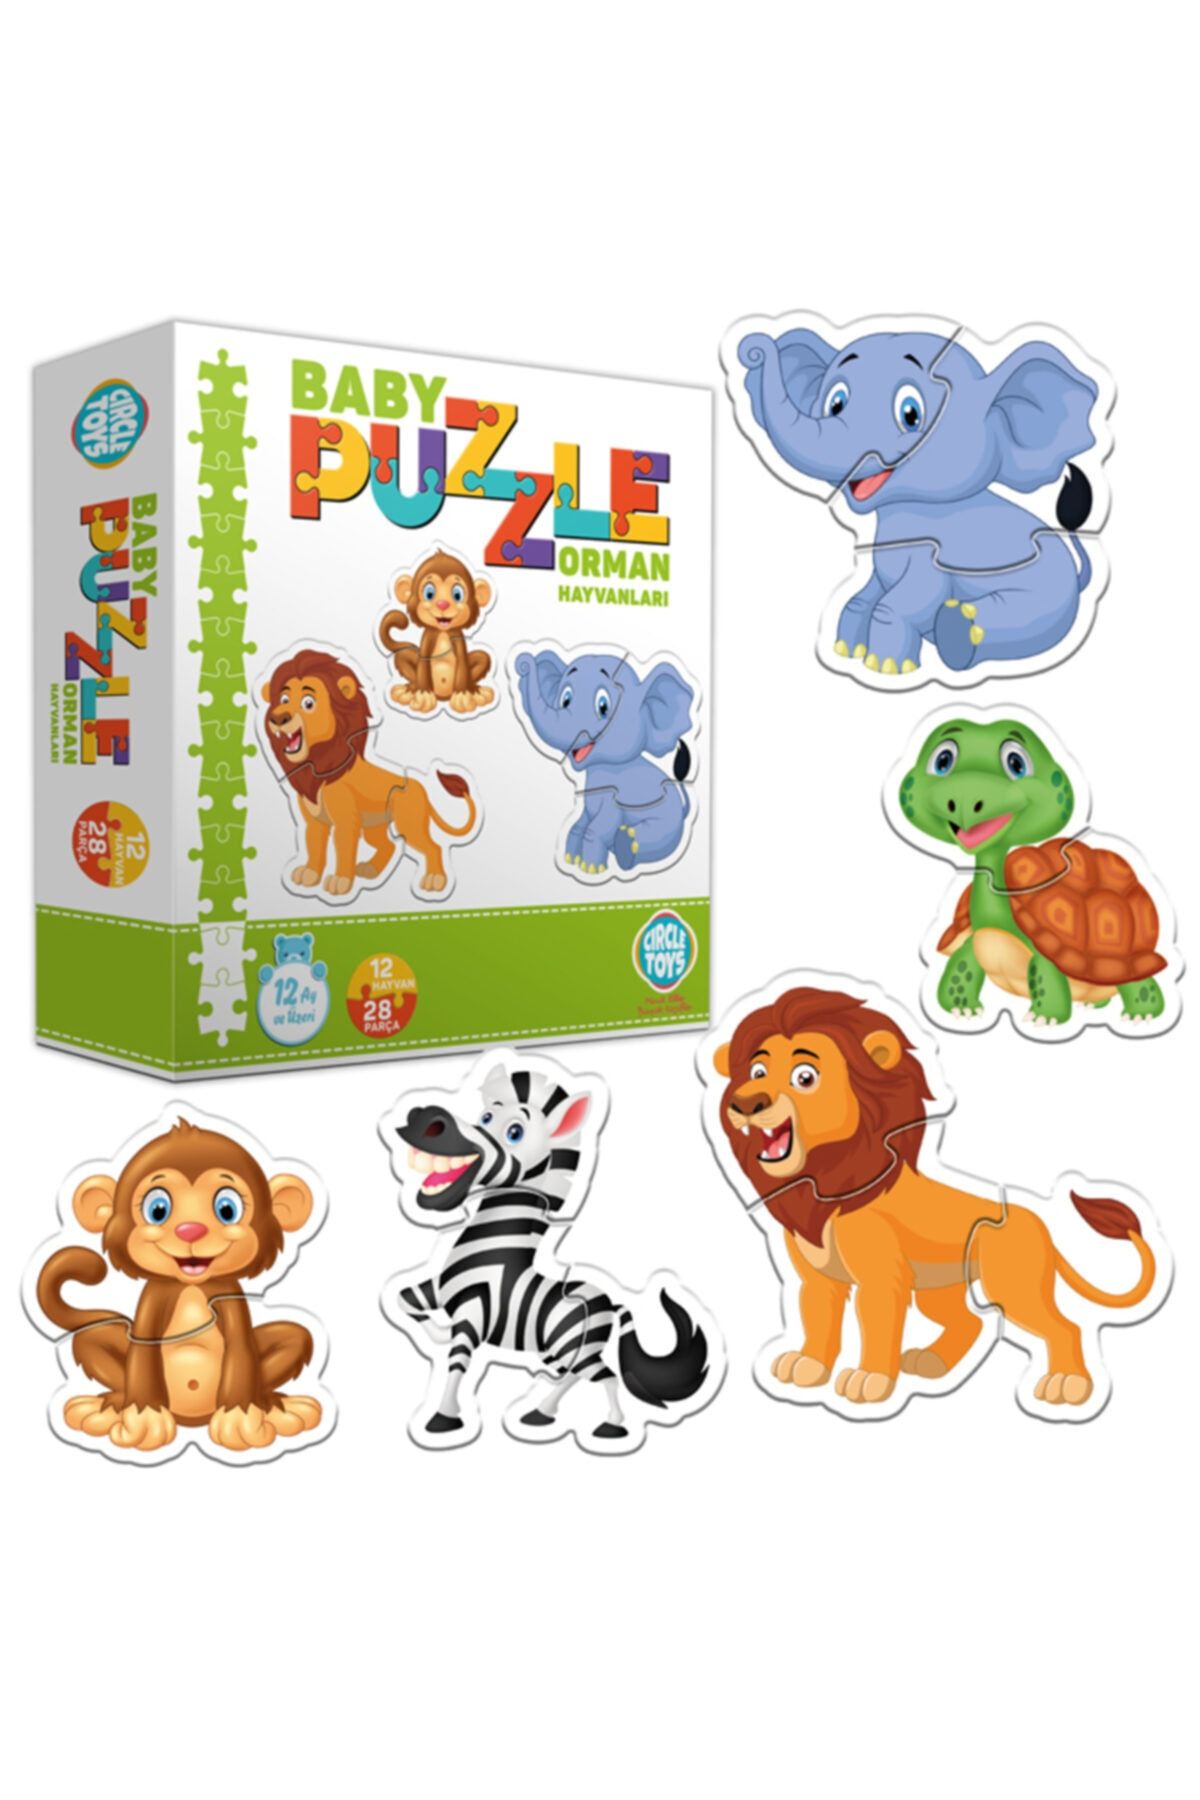 Circle Toys Özlem Toys Baby Puzzle Orman Hayvanları Algılama El Göz Koordinasyon Becerisi +1 Yaş 28 Parça